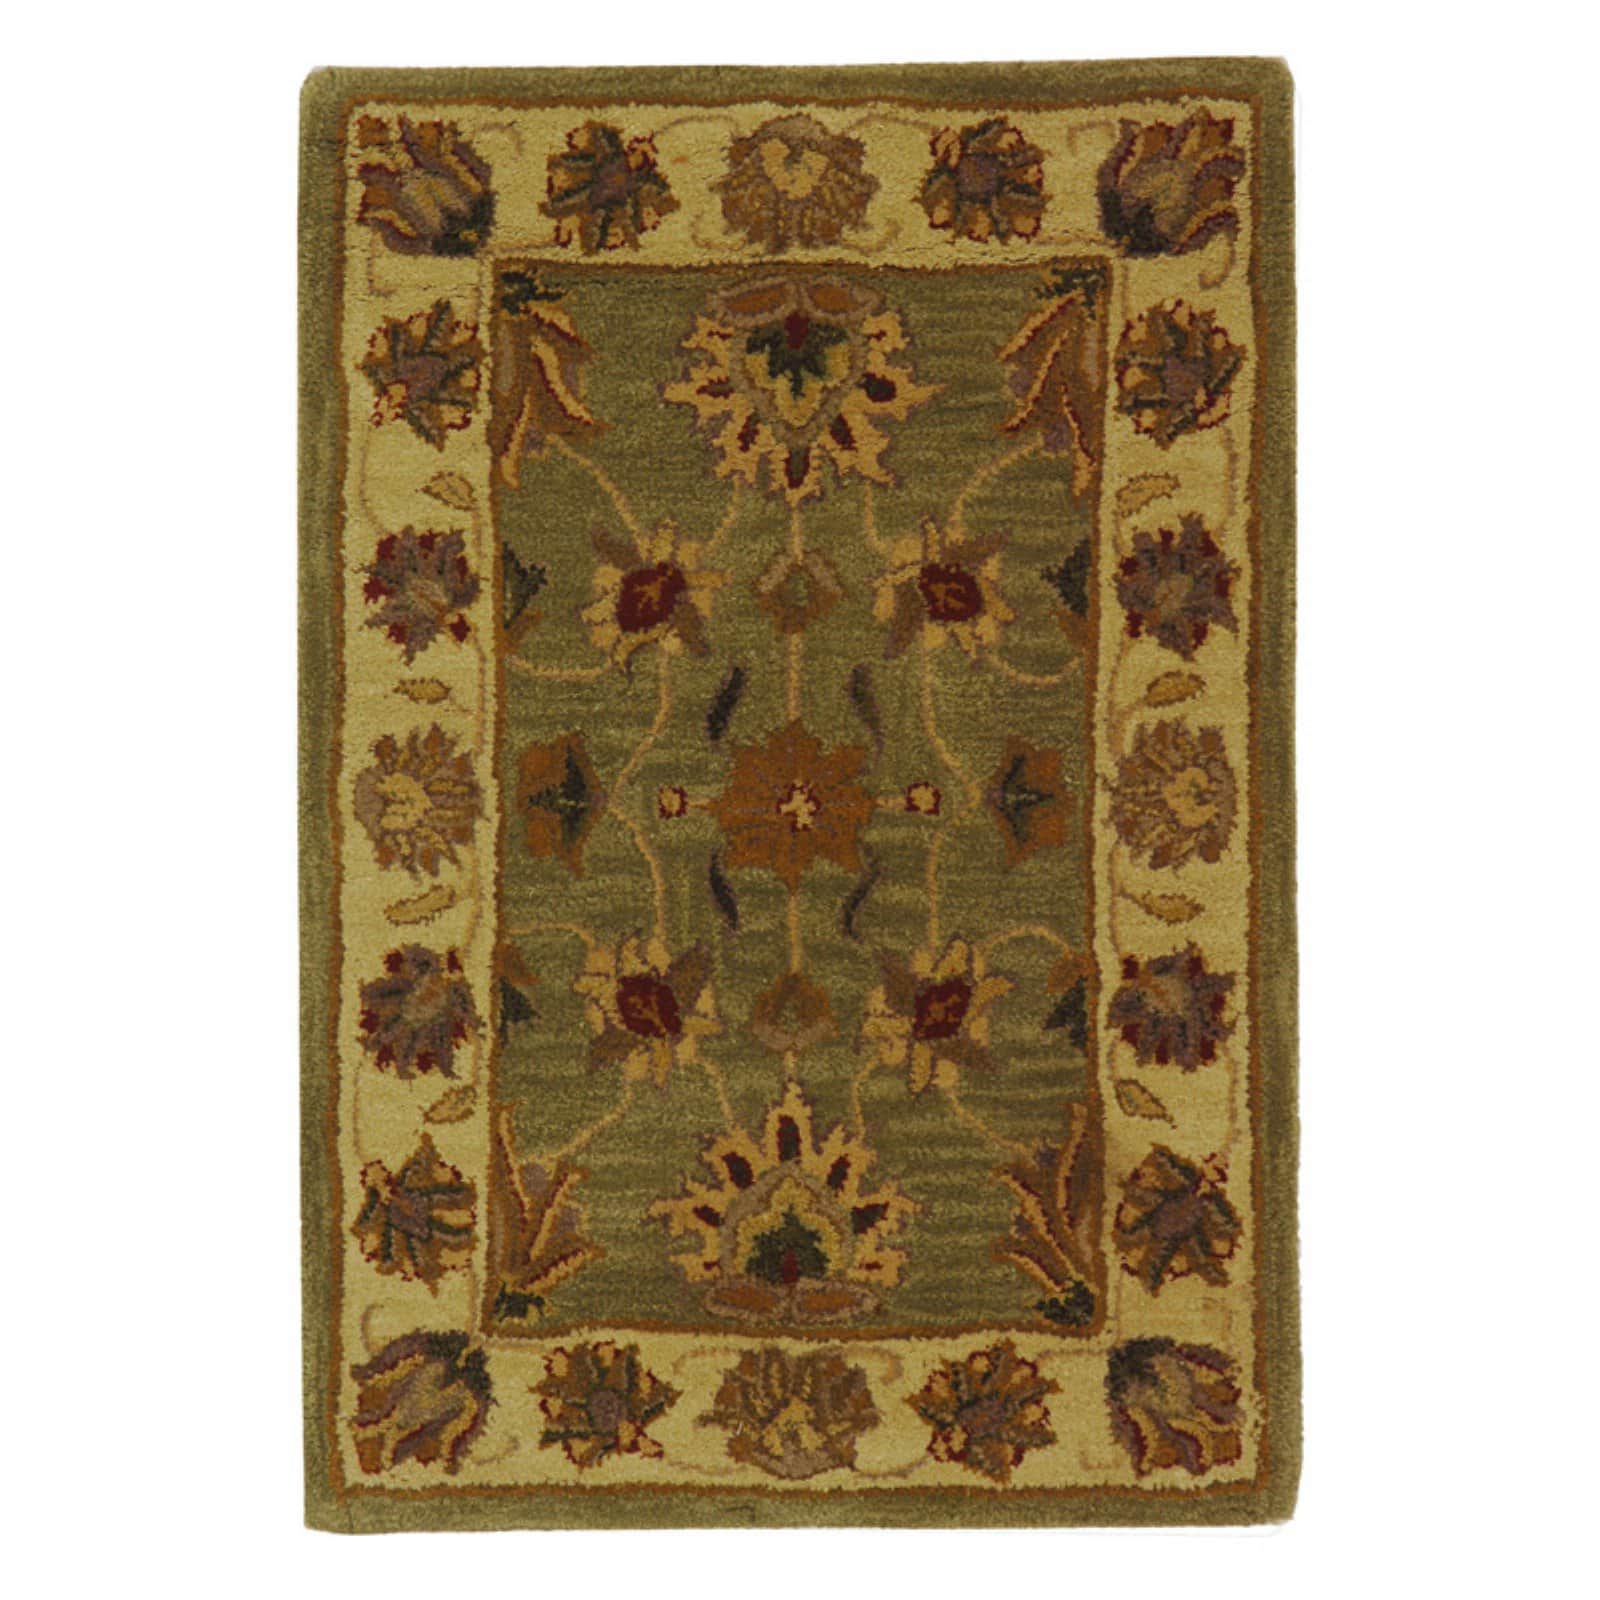 SAFAVIEH Heritage Regis Traditional Wool Area Rug, Green/Gold, 6' x 9' - image 2 of 10